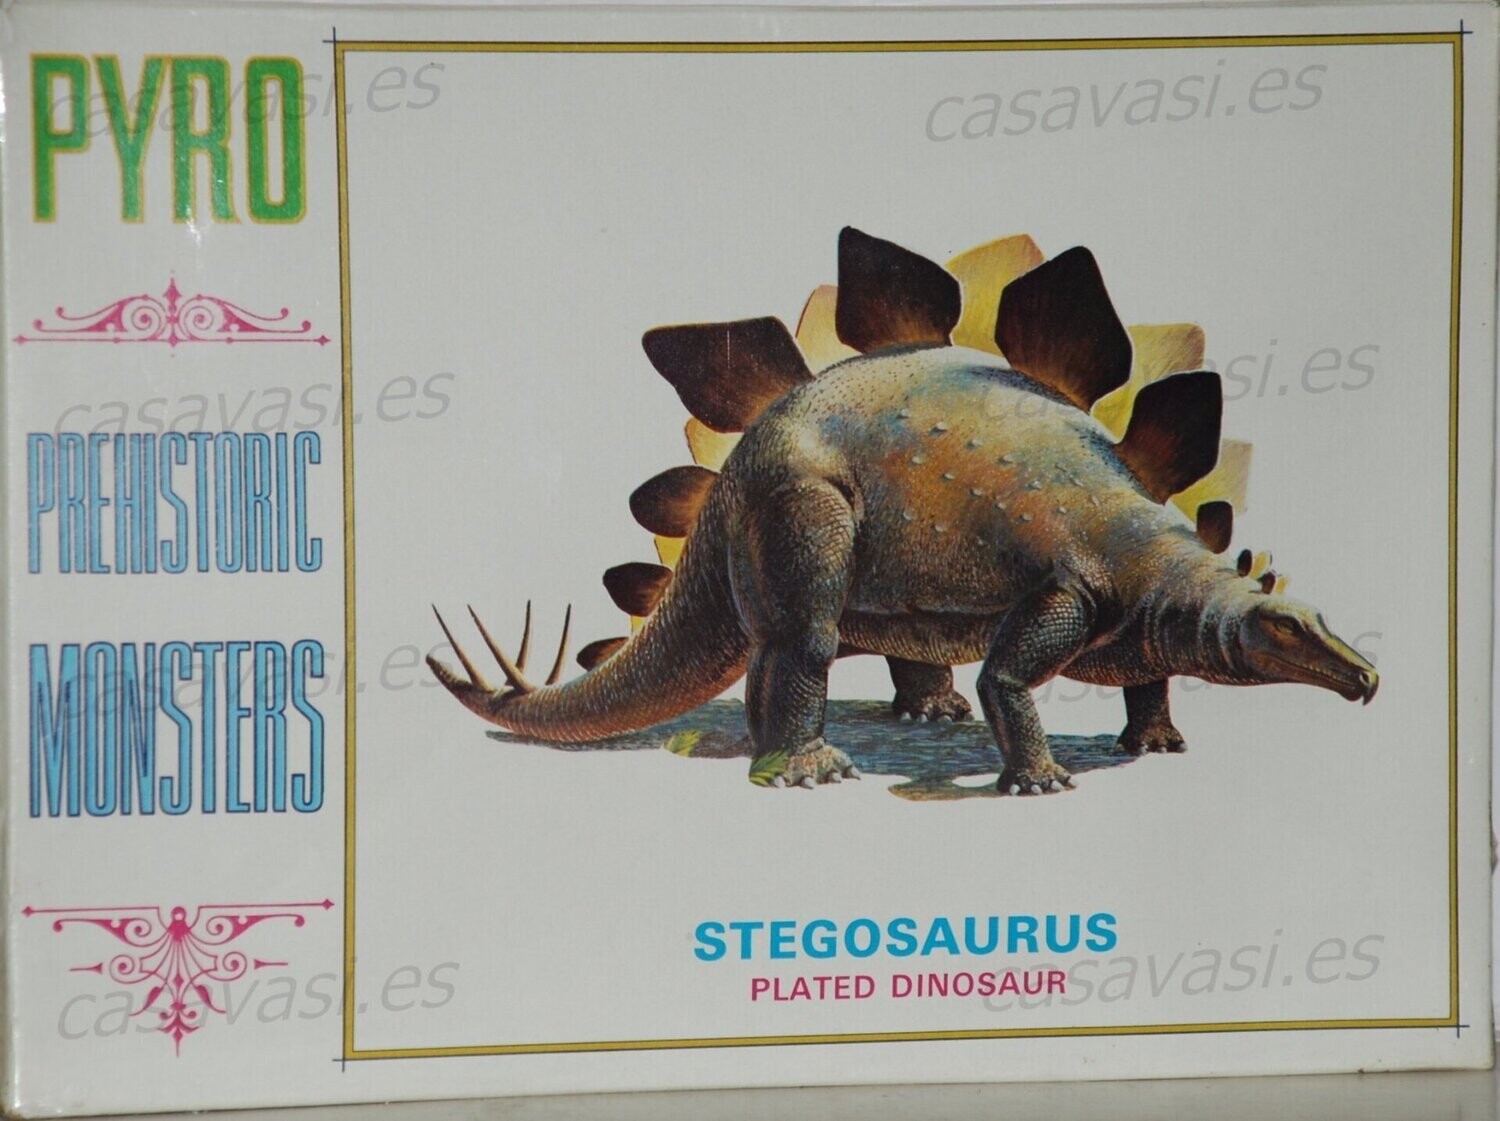 Pyro - d273-100 - Nº1 - Stegosaurus Plated Dinosaur
Box Size 25 x 18 cm.